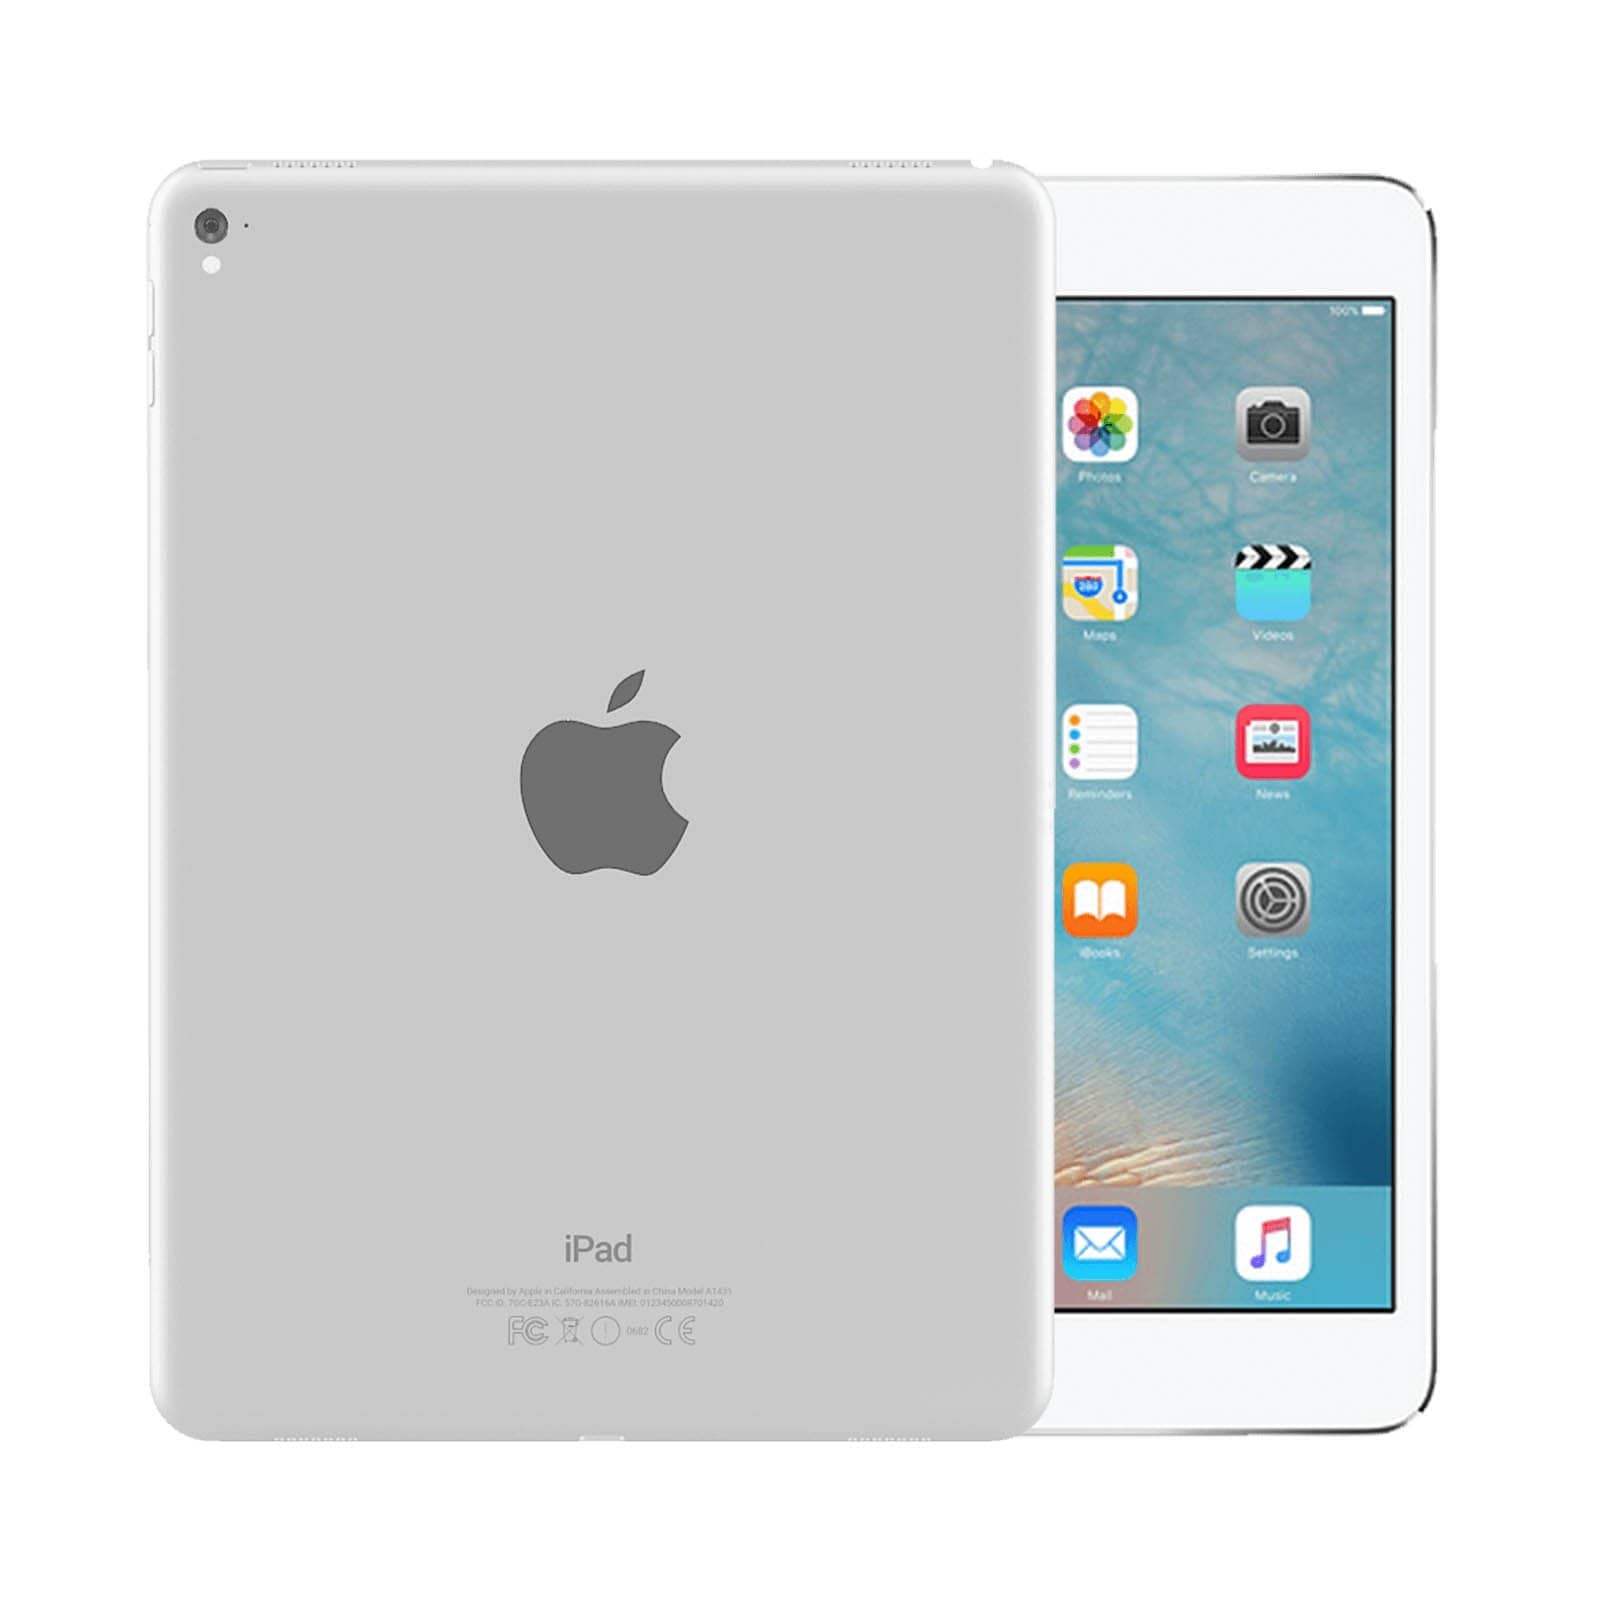 iPad Pro 9.7 Inch 128GB Silver Good - WiFi 128GB Silver Good